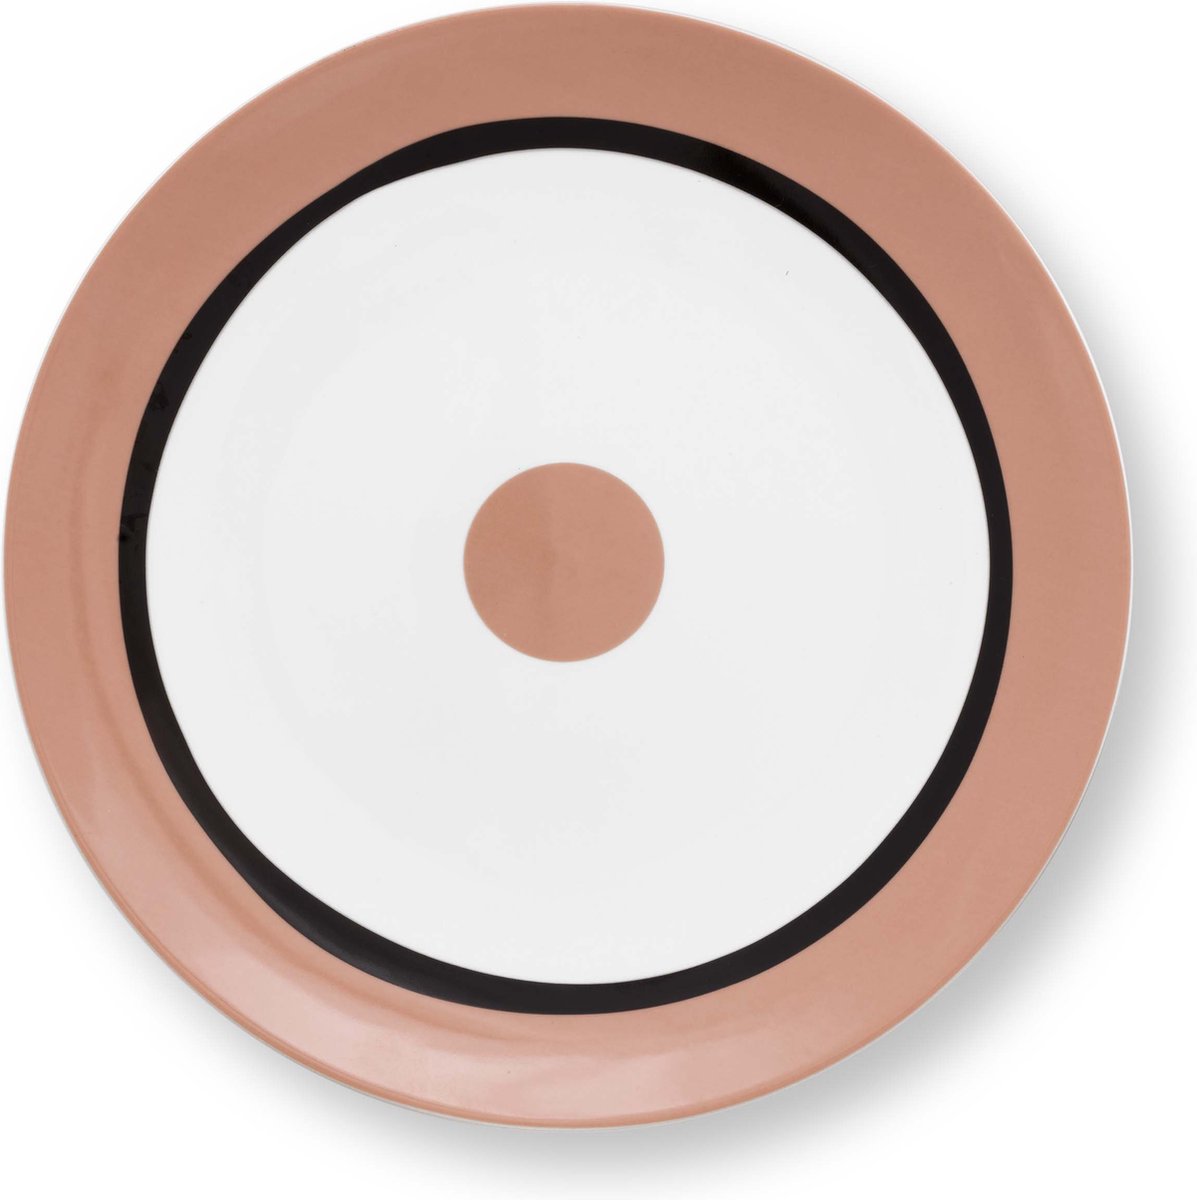 VT Wonen Circles soft Clay Pink - dinerbord - ⌀ 25.5cm - porselein - bord - roze - servies